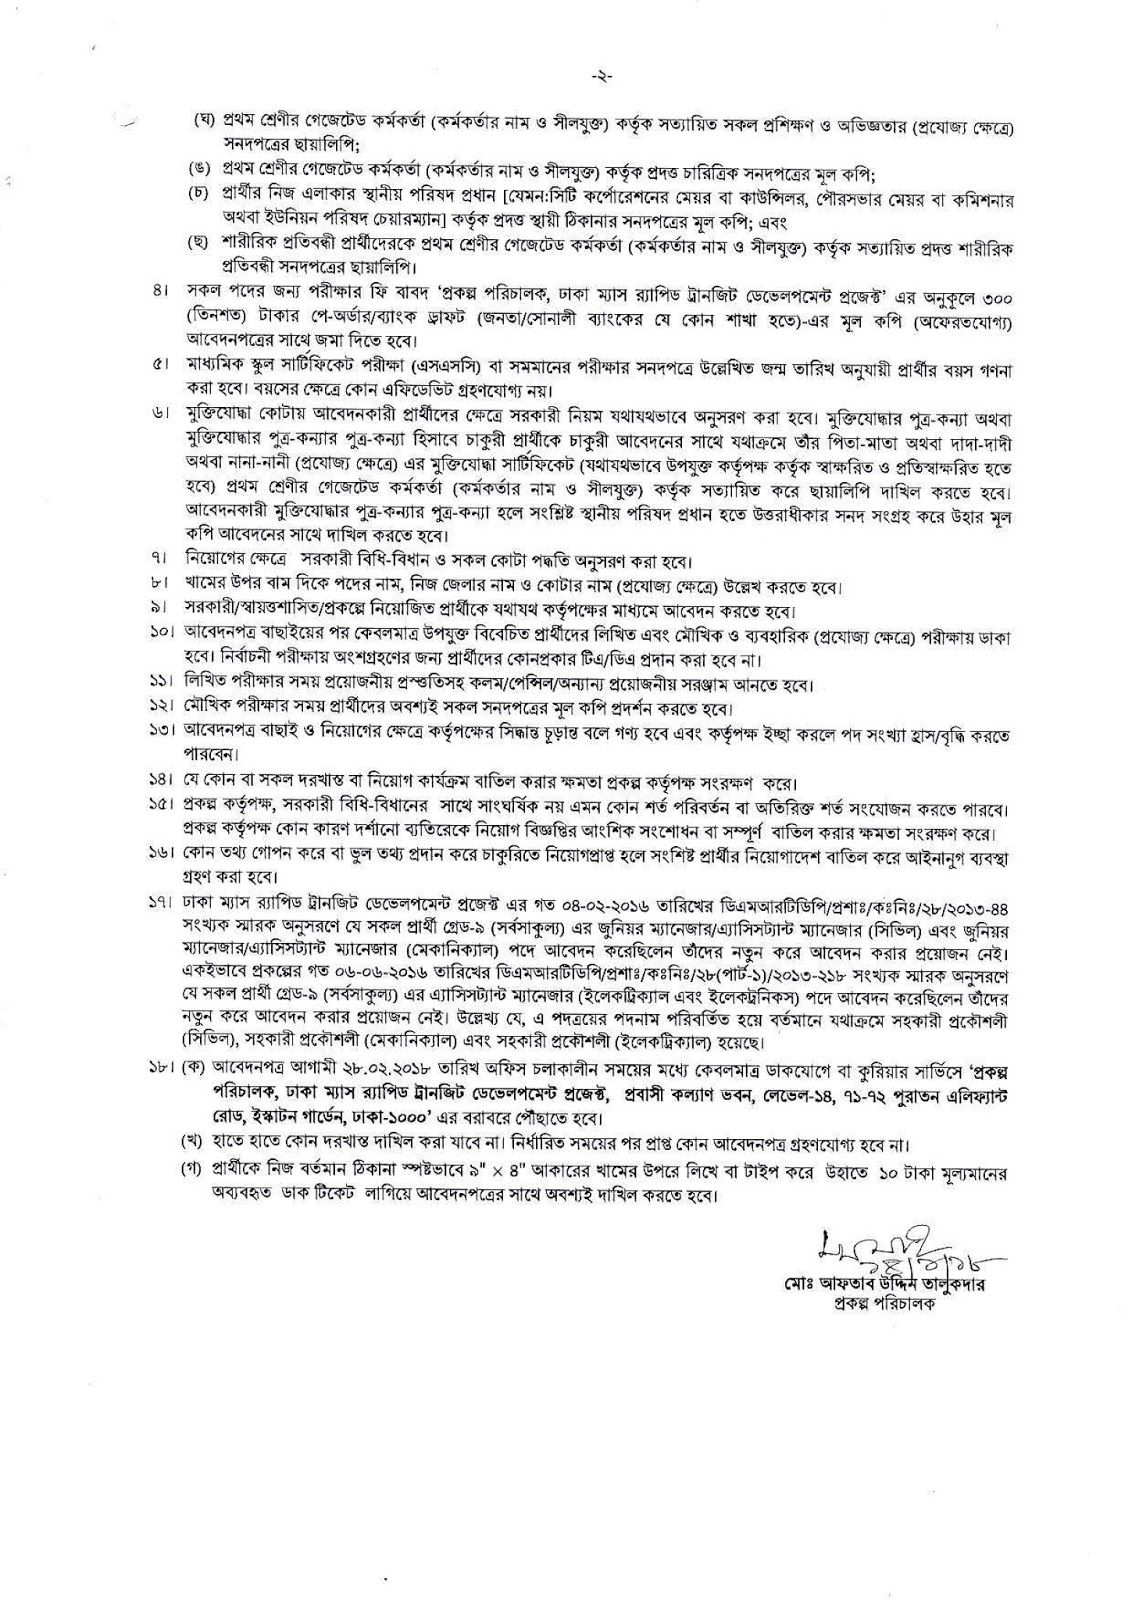 DMTCL - Dhaka Mass Transit Company Limited job circular 2018